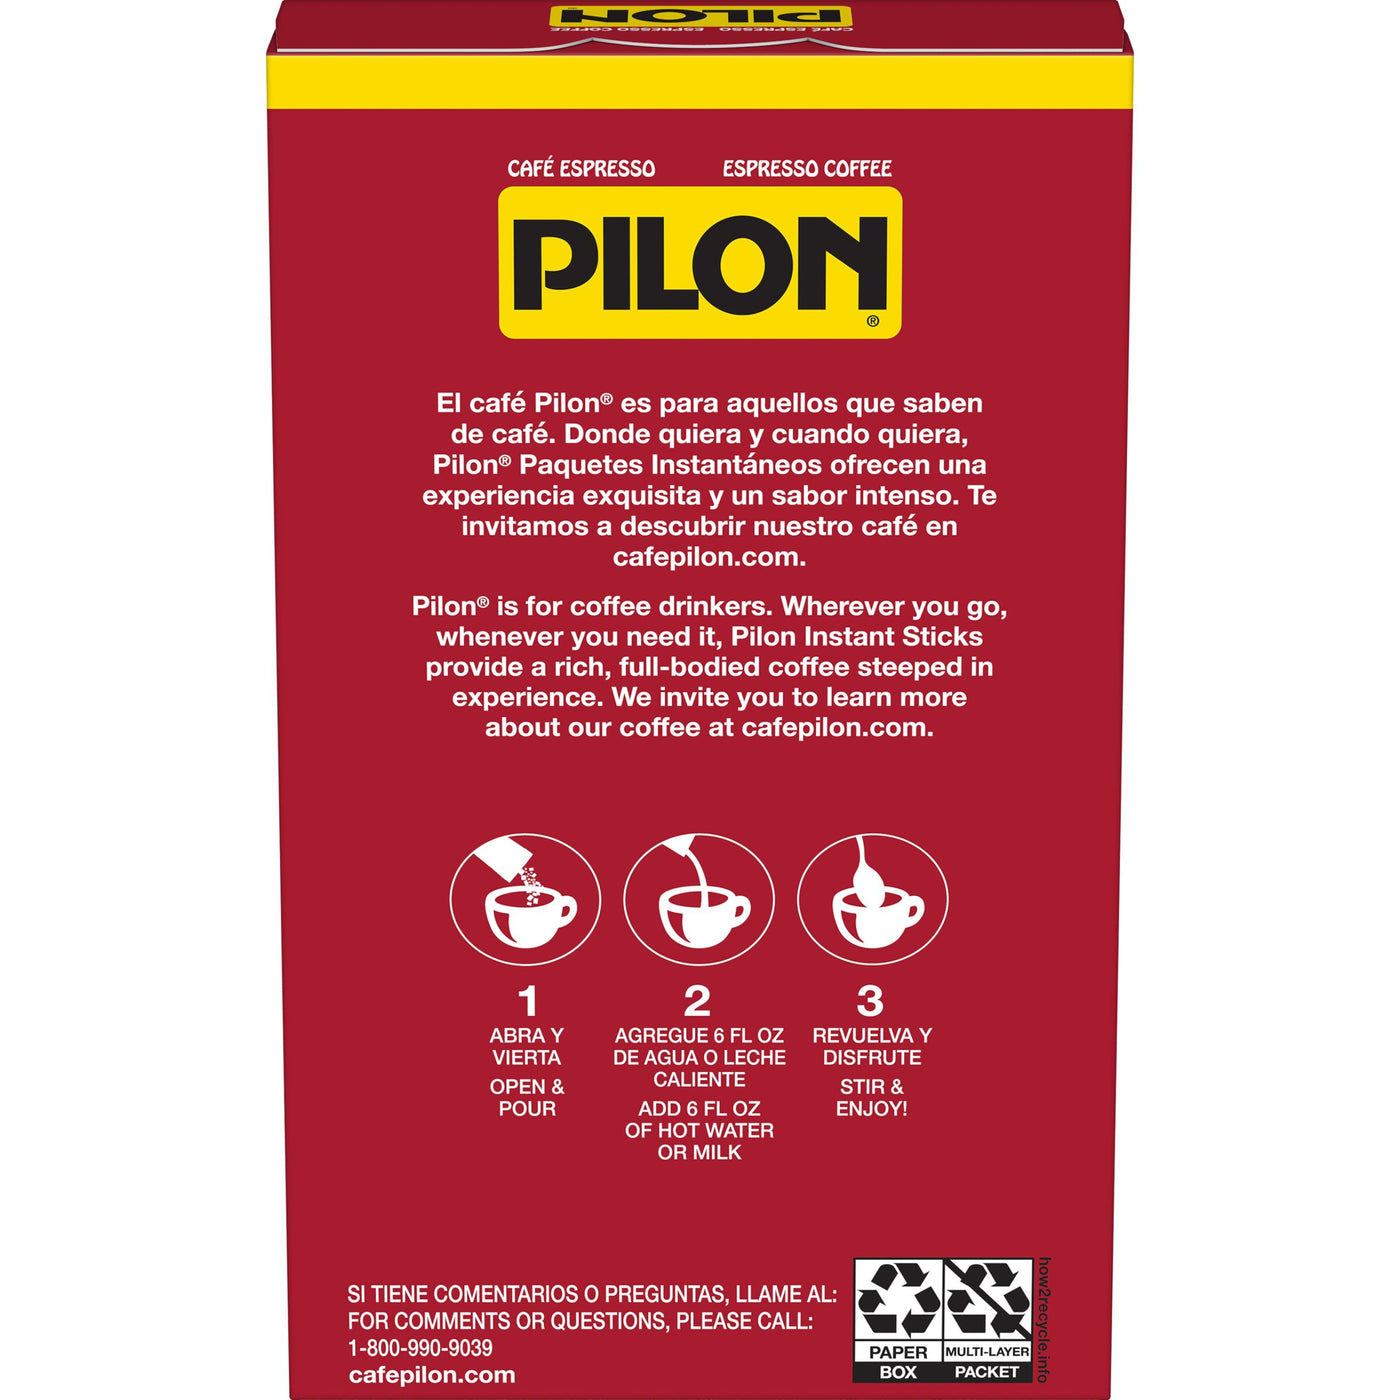 Cafe Pilon Espresso, Instant Coffee Single Serve Packets, 6 Count